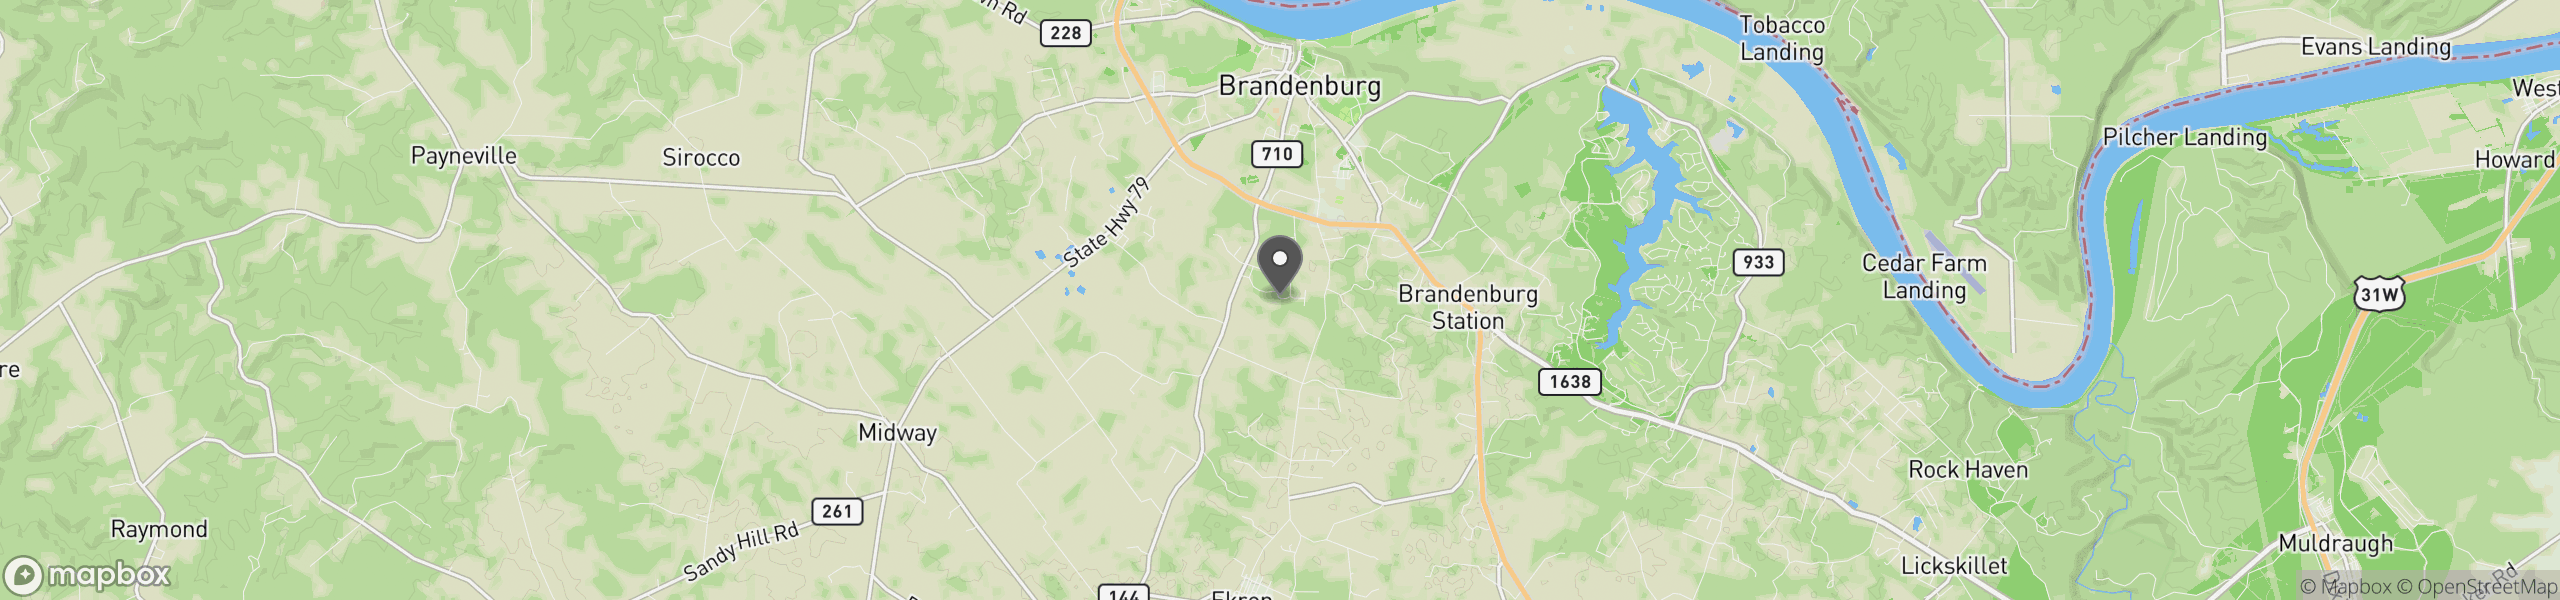 Brandenburg, KY 40108